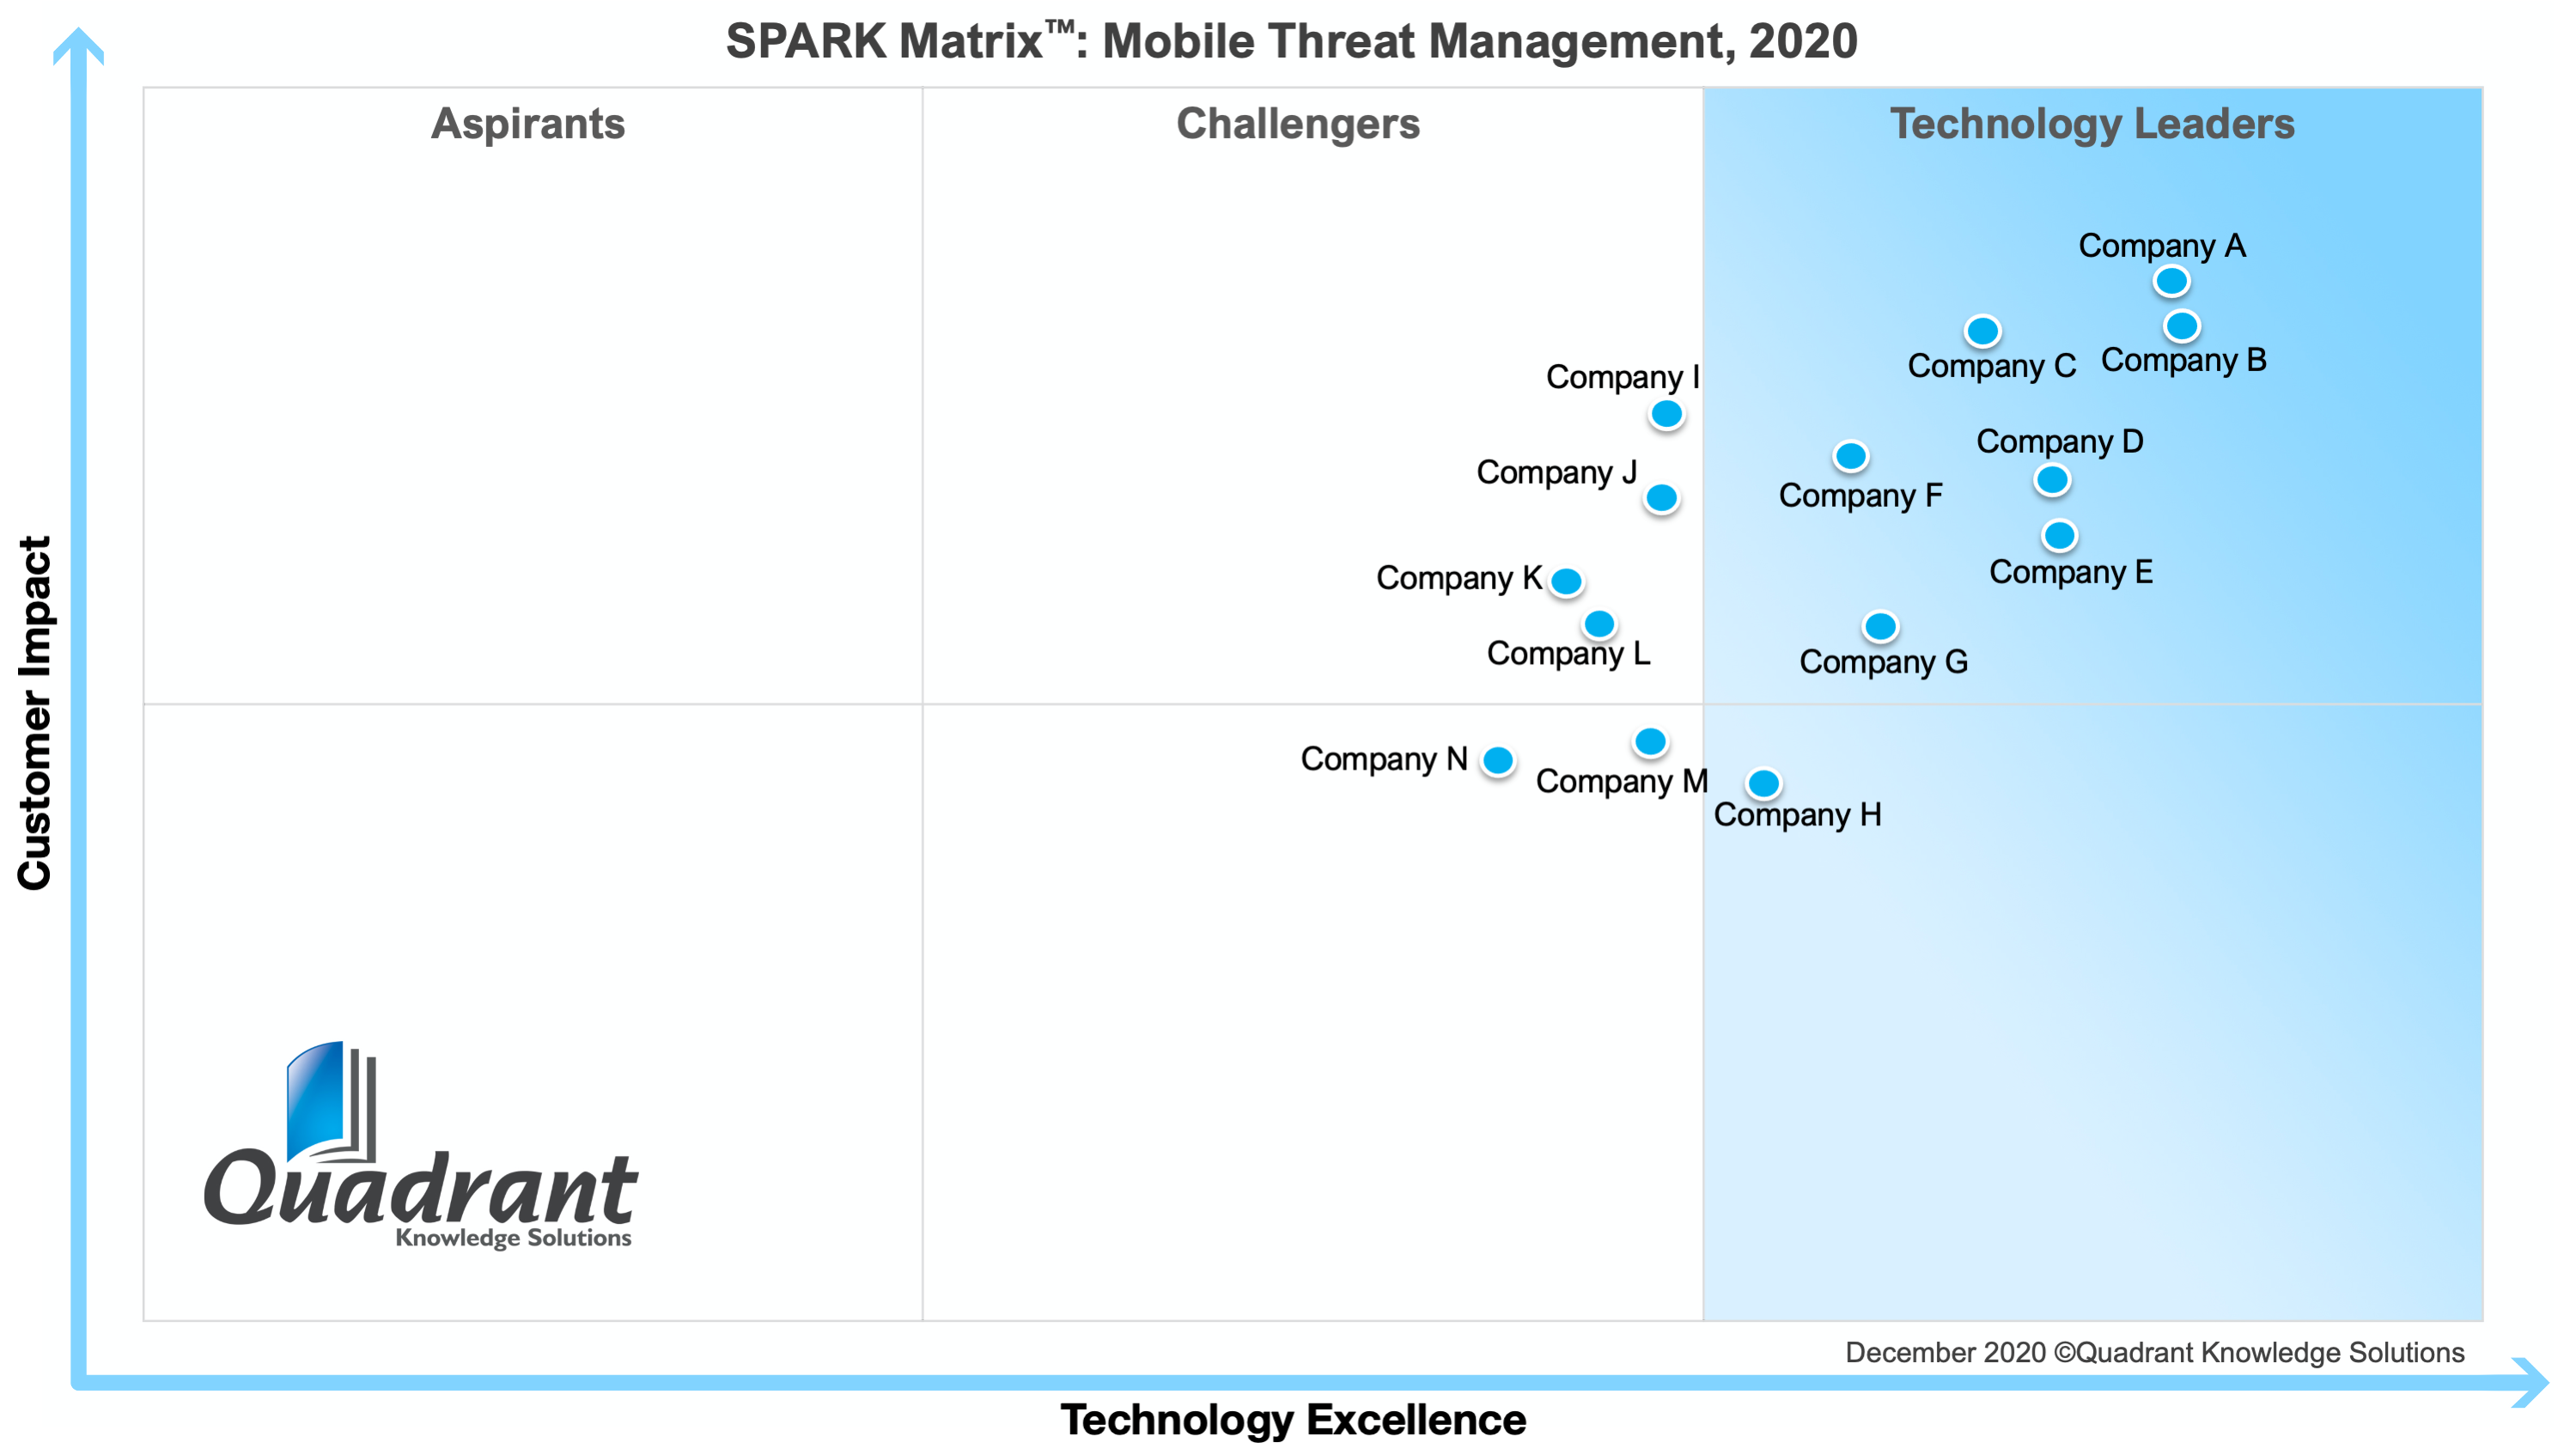 2020-SPARK-Matrix-Mobile-Threat-Management-Quadrant-Knowledge-Solutions